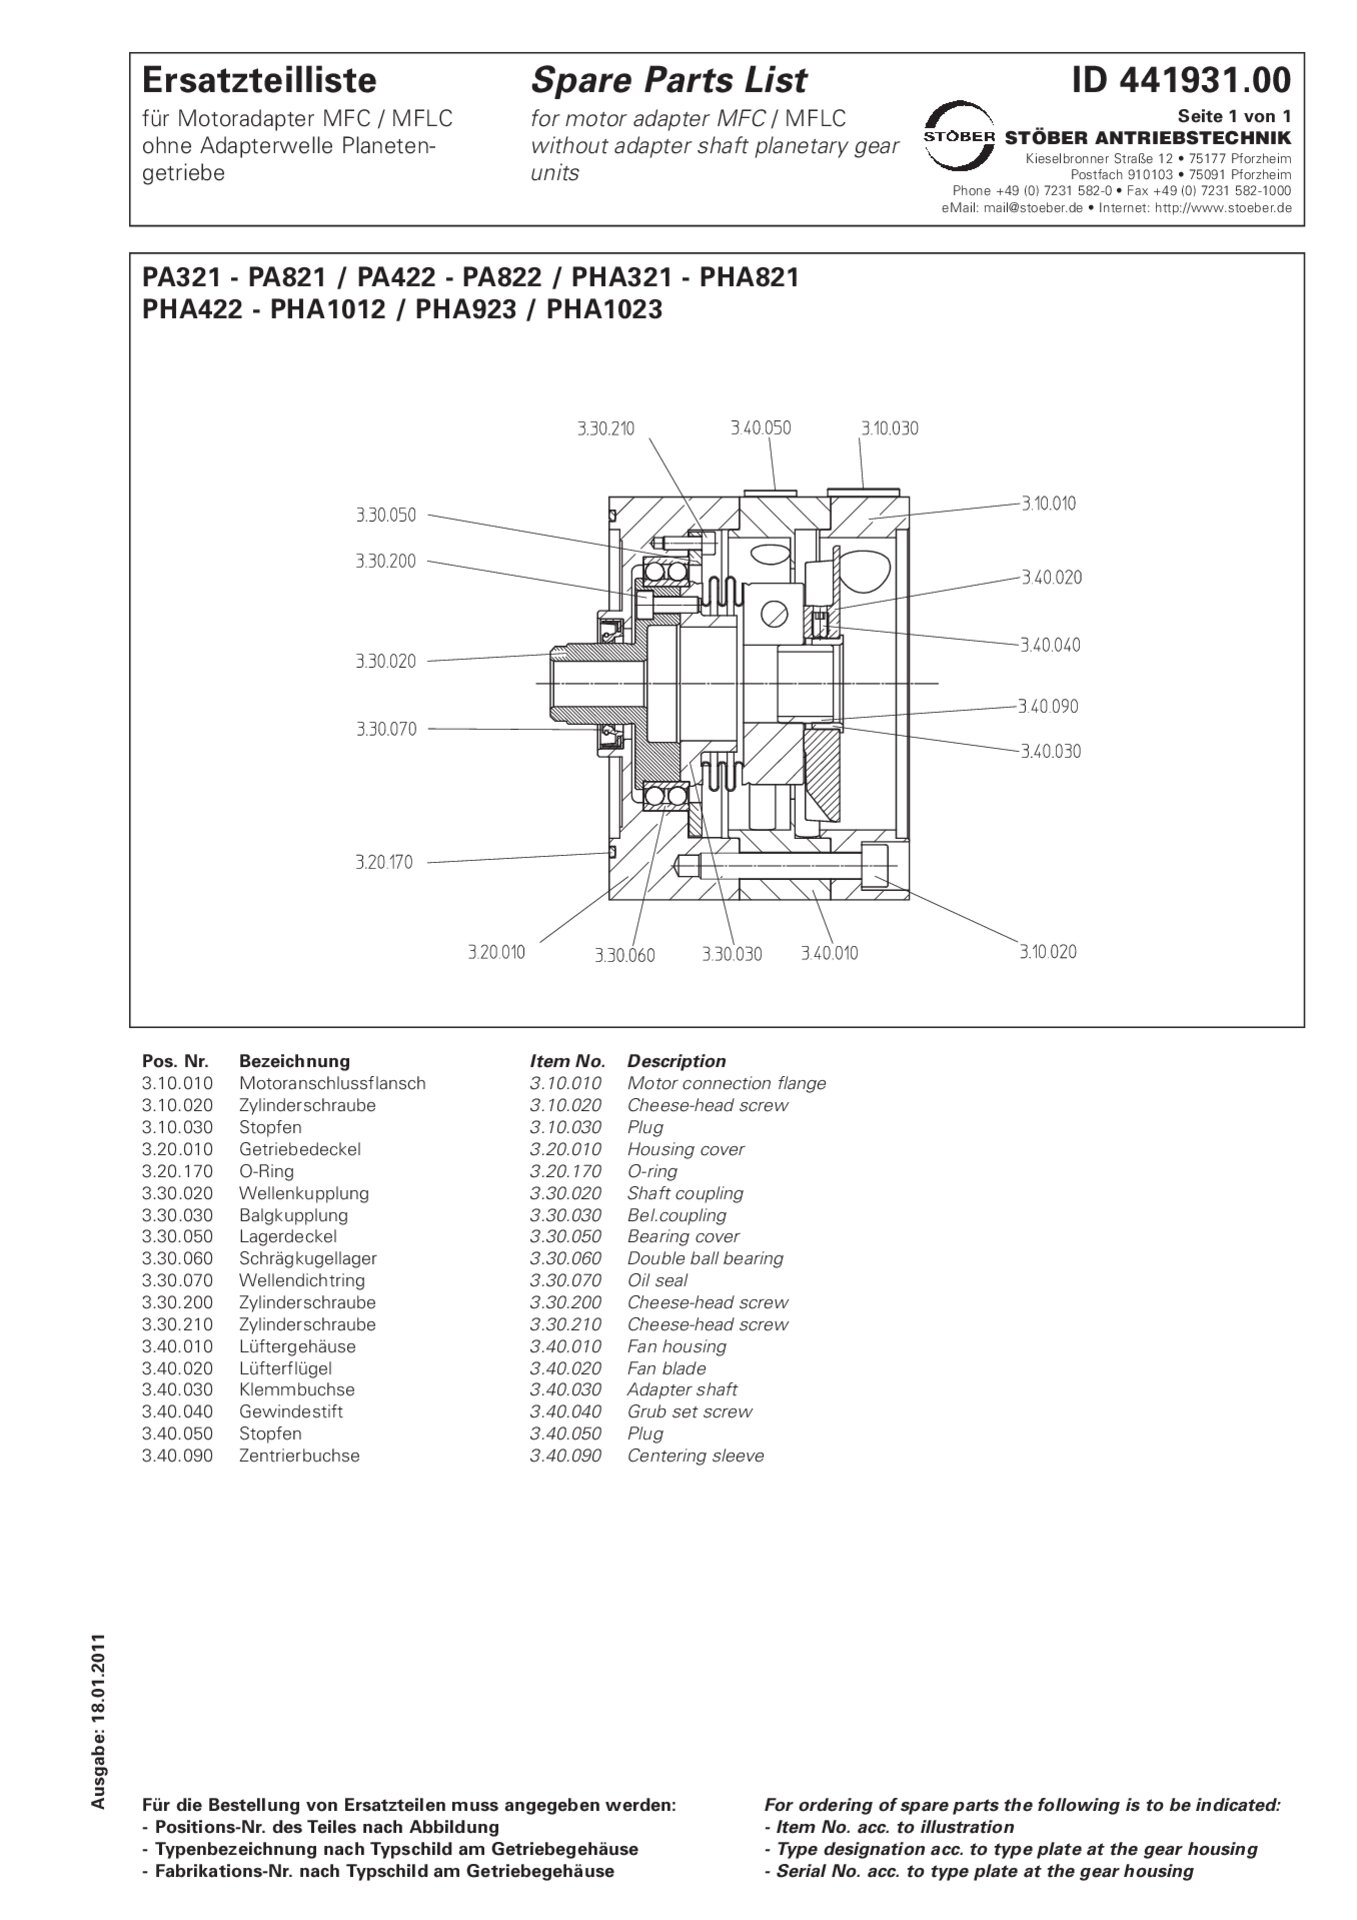 Spare parts list MFC / MFLC without adapter shaft PA / PHAErsatzteilliste MFC / MFLC ohne Adapterwelle PA / PHA